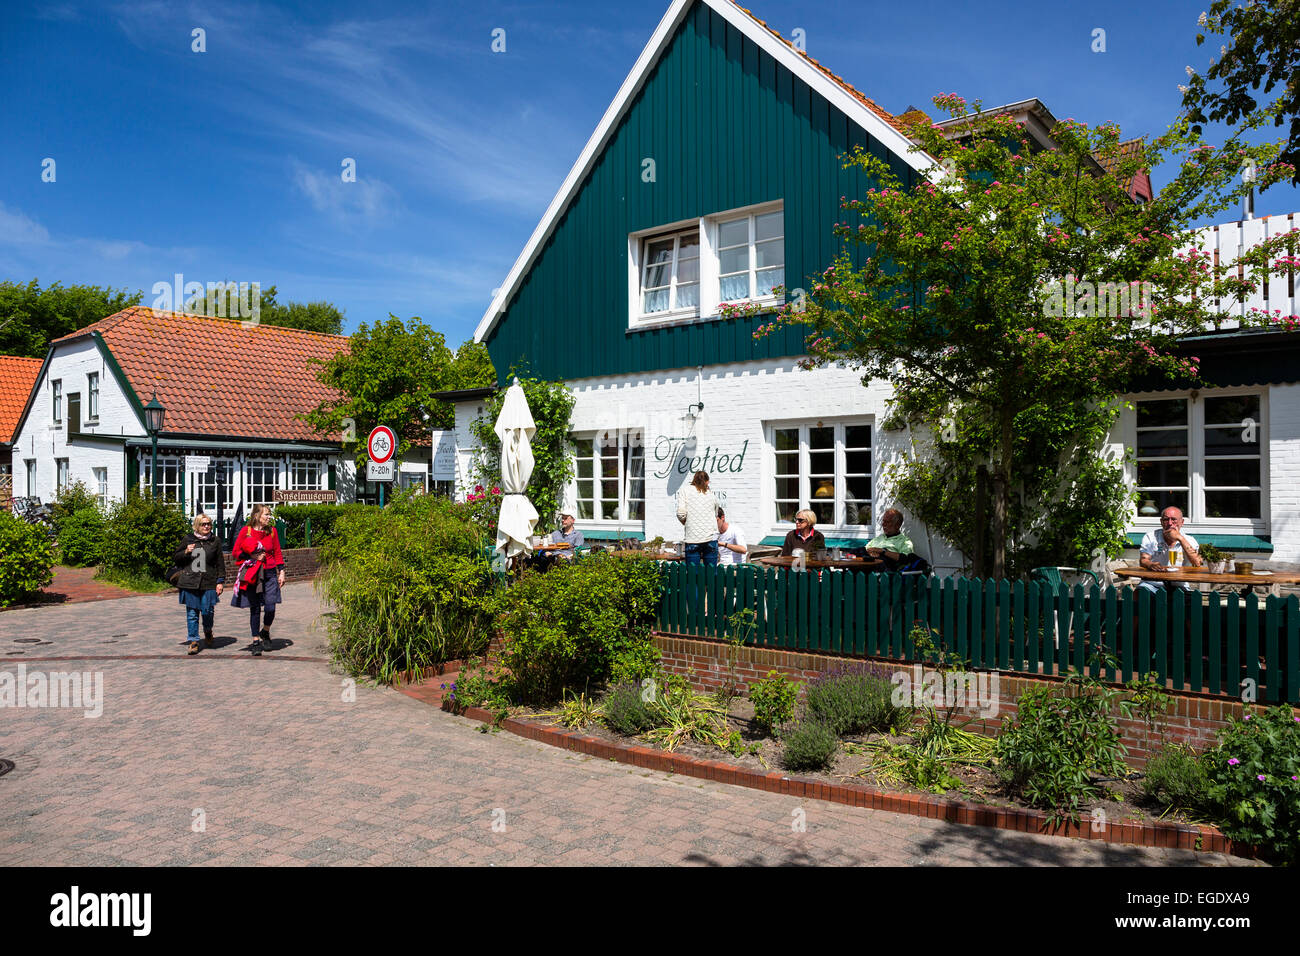 Teetied Cafe, Spiekeroog Island, Nationalpark, North Sea, East Frisian Islands, East Frisia, Lower Saxony, Germany, Europe Stock Photo